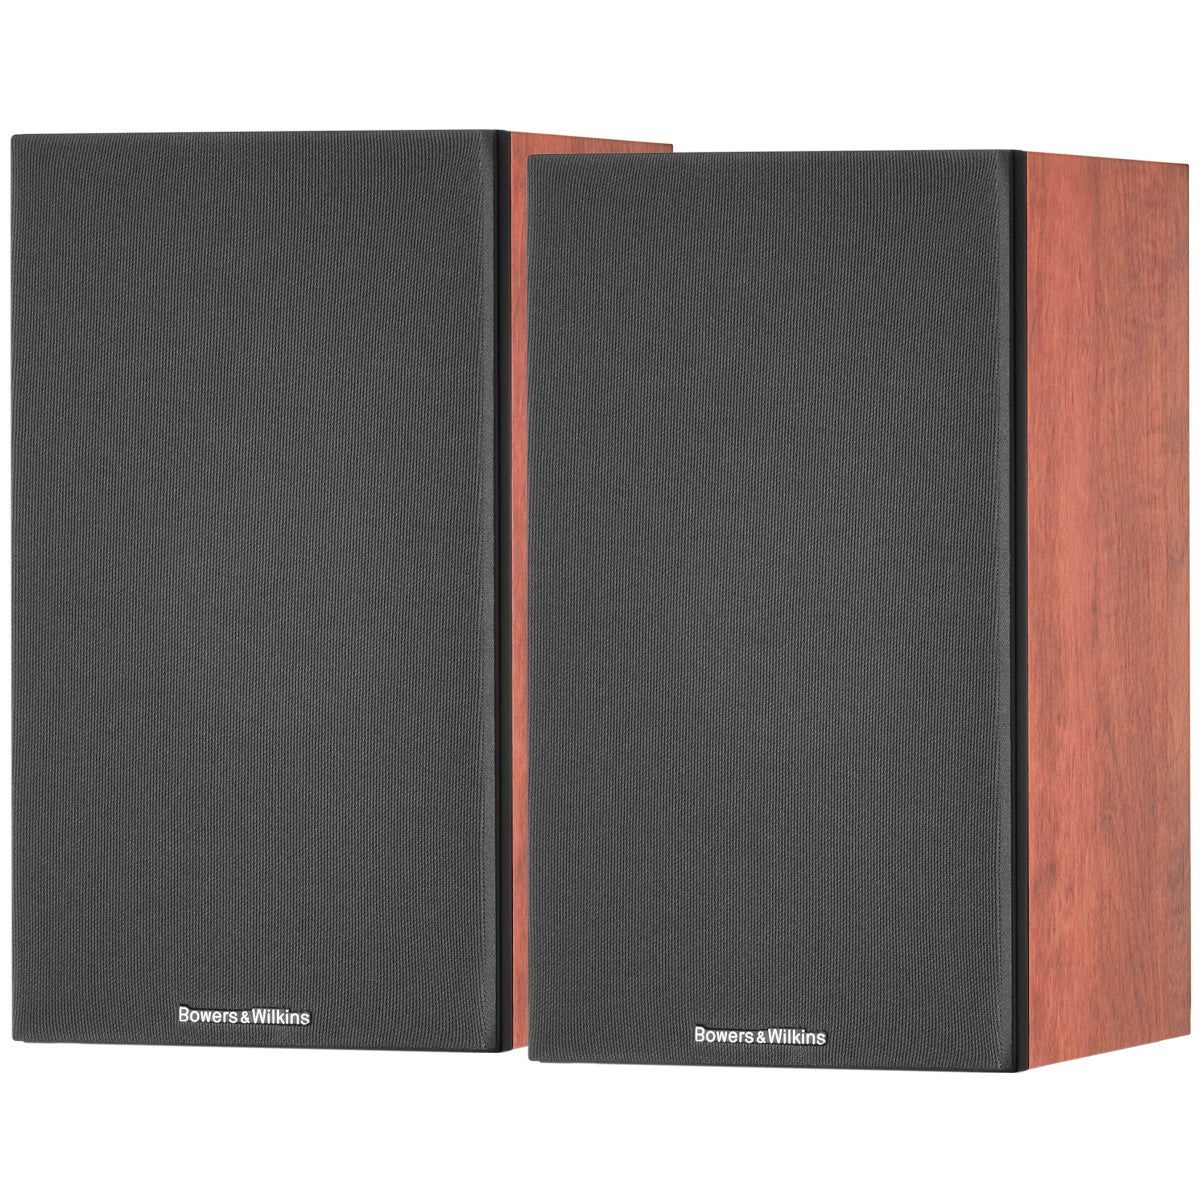 Bowers & Wilkins 607 S2 Anniversary Edition Bookshelf Speakers - Red Cherry - The Audio Experts